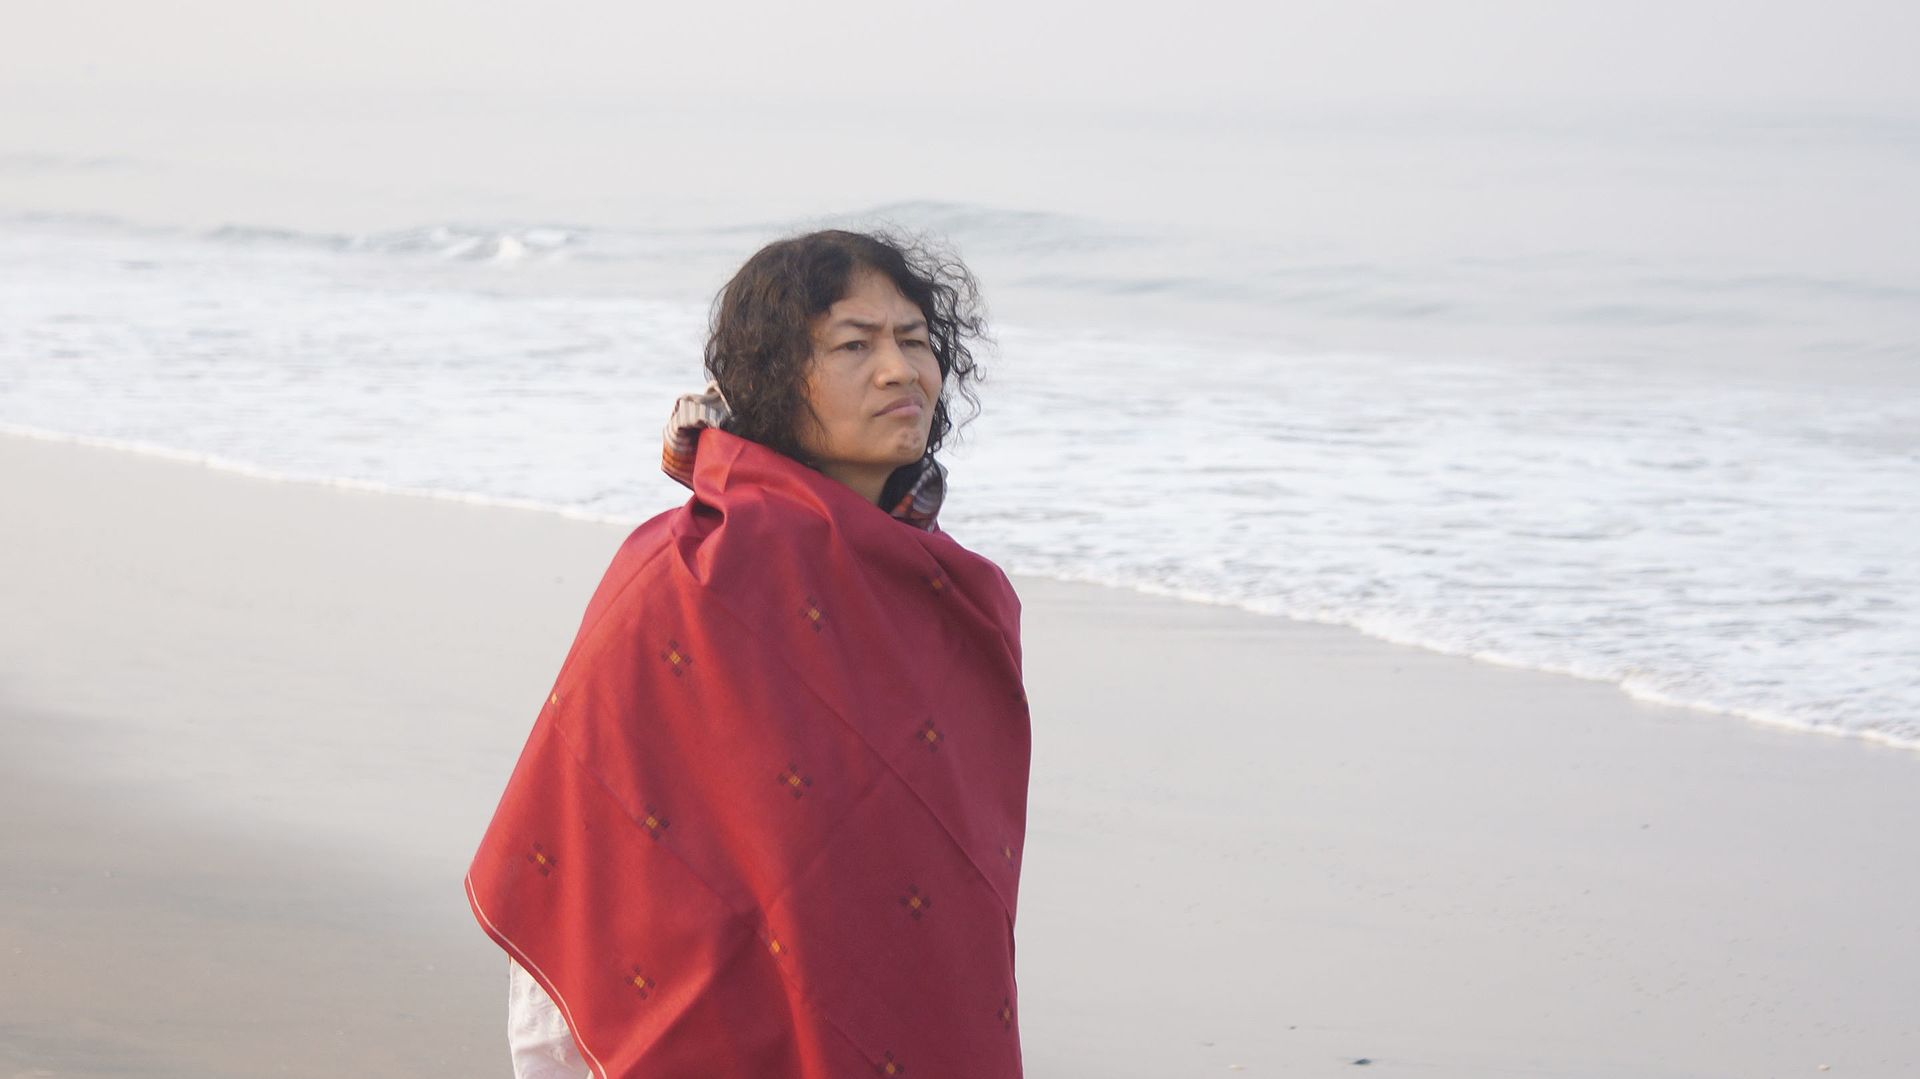 Irom Chanu Sharmila's image